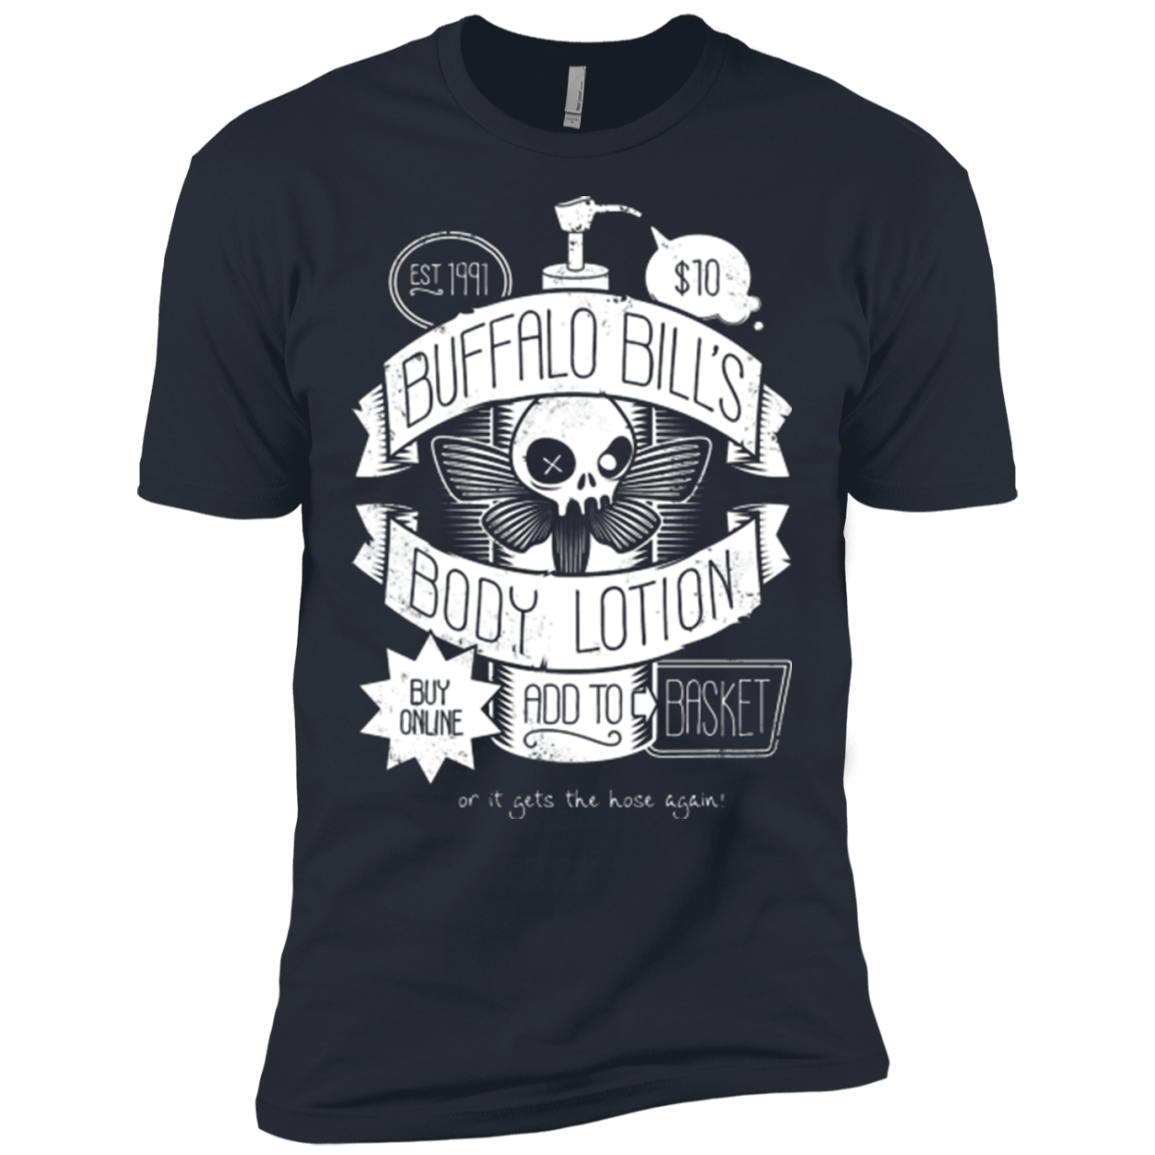 T-Shirts Indigo / X-Small Body Lotion Men's Premium T-Shirt